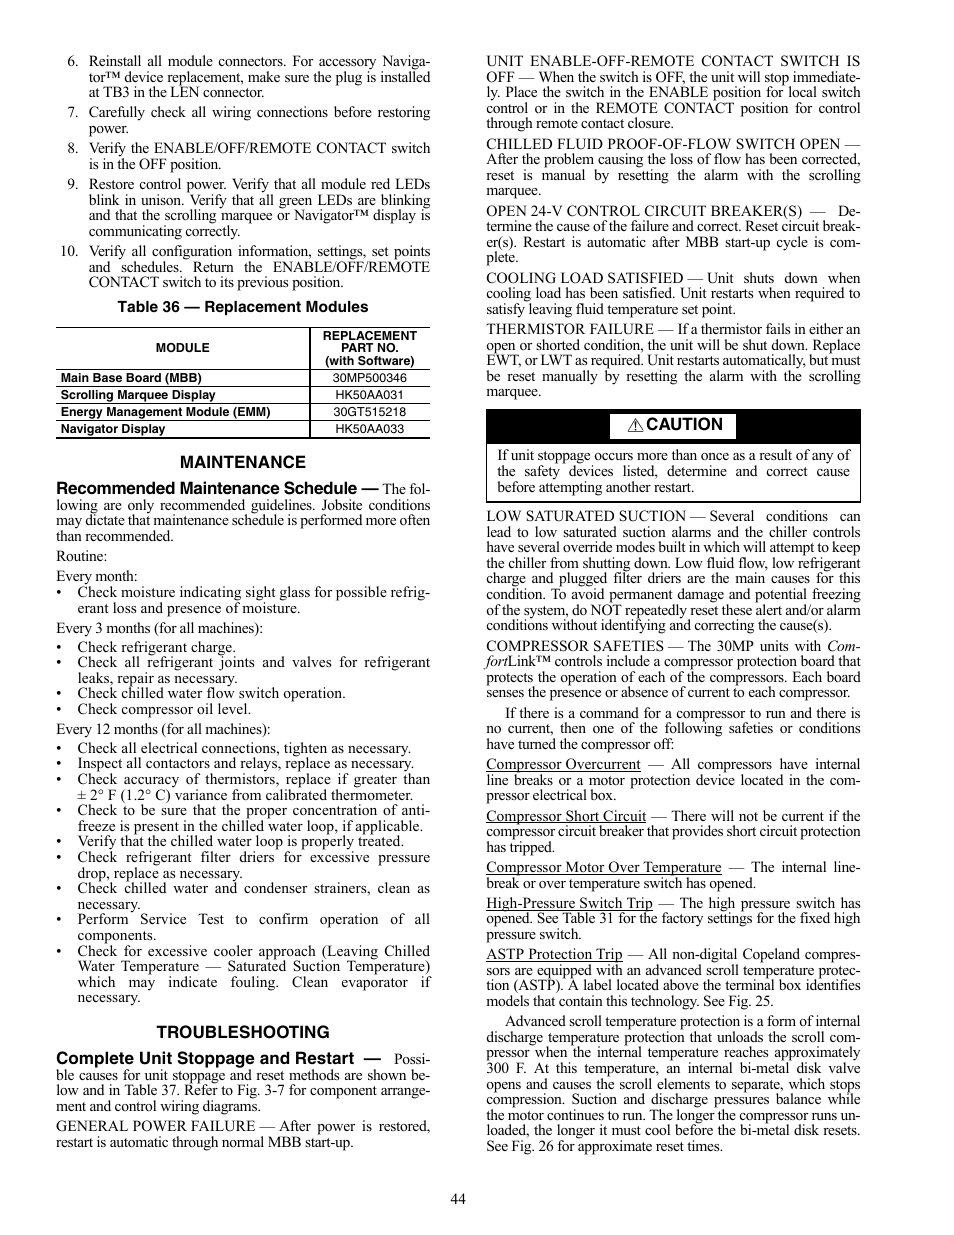 Carrier AQUASNAP MPW015-045 User Manual | Page 44 / 80 | Original mode